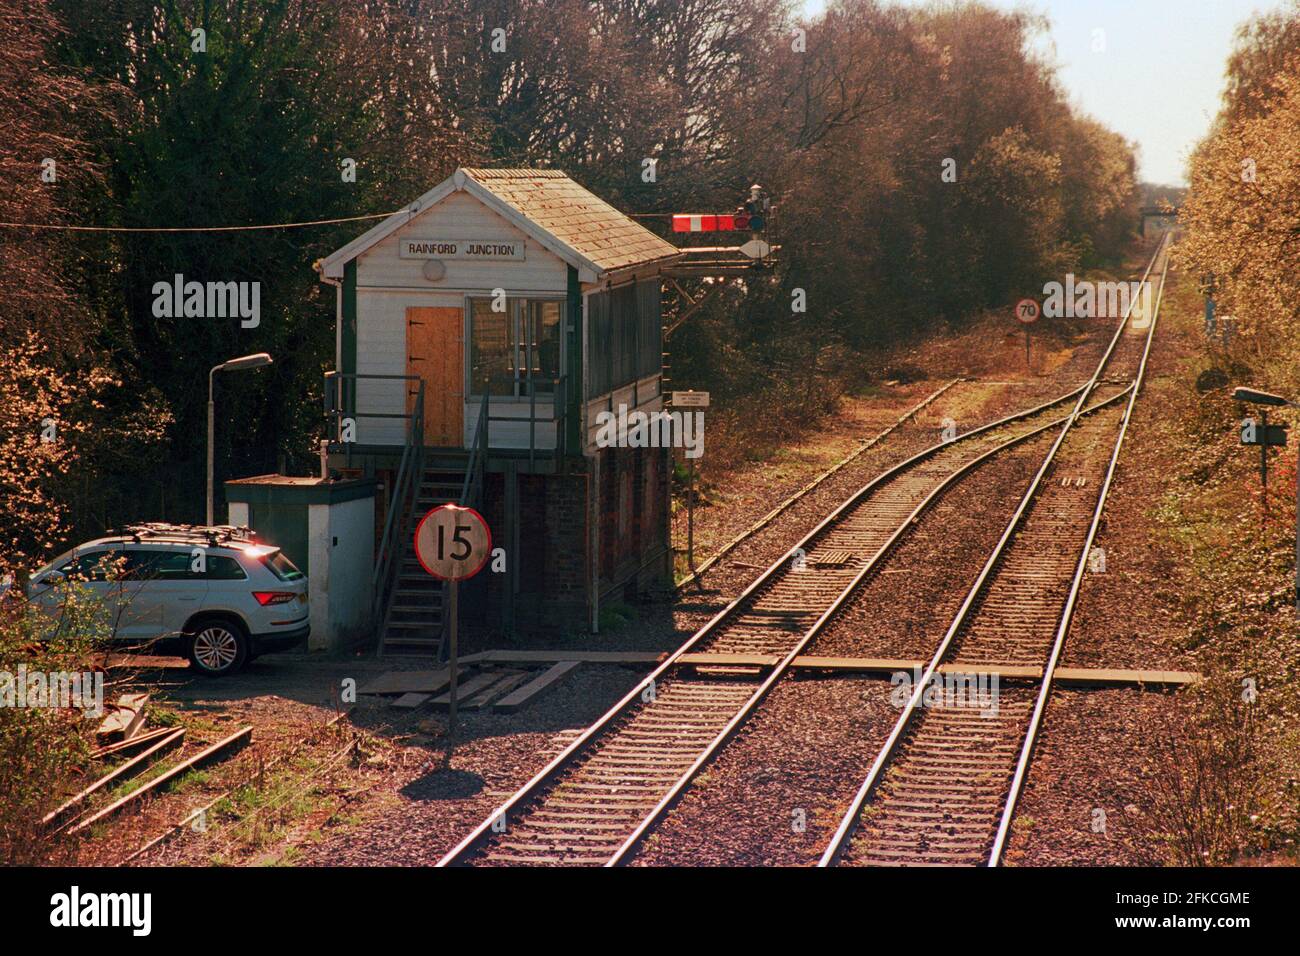 Rainford, UK - 2 April 2021: The signal box and semaphore signals at Rainford station. Stock Photo